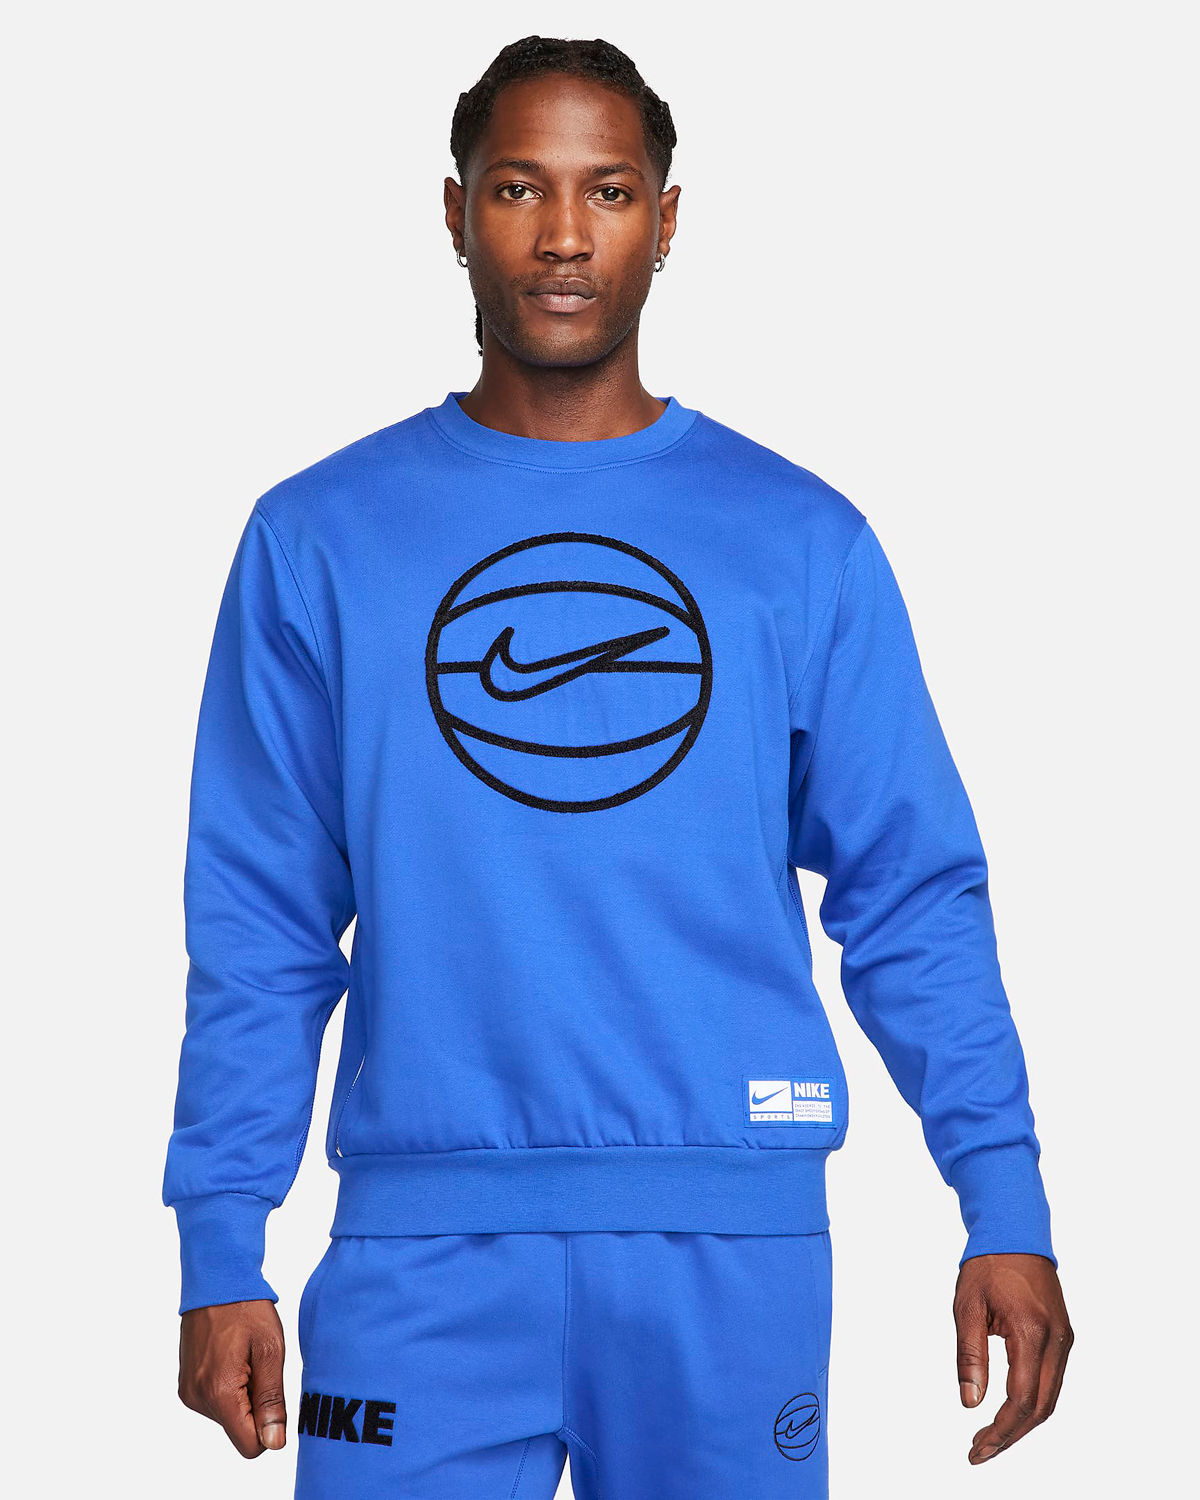 Nike-Standard-Issue-Basketball-Crew-Sweatshirt-Game-Royal